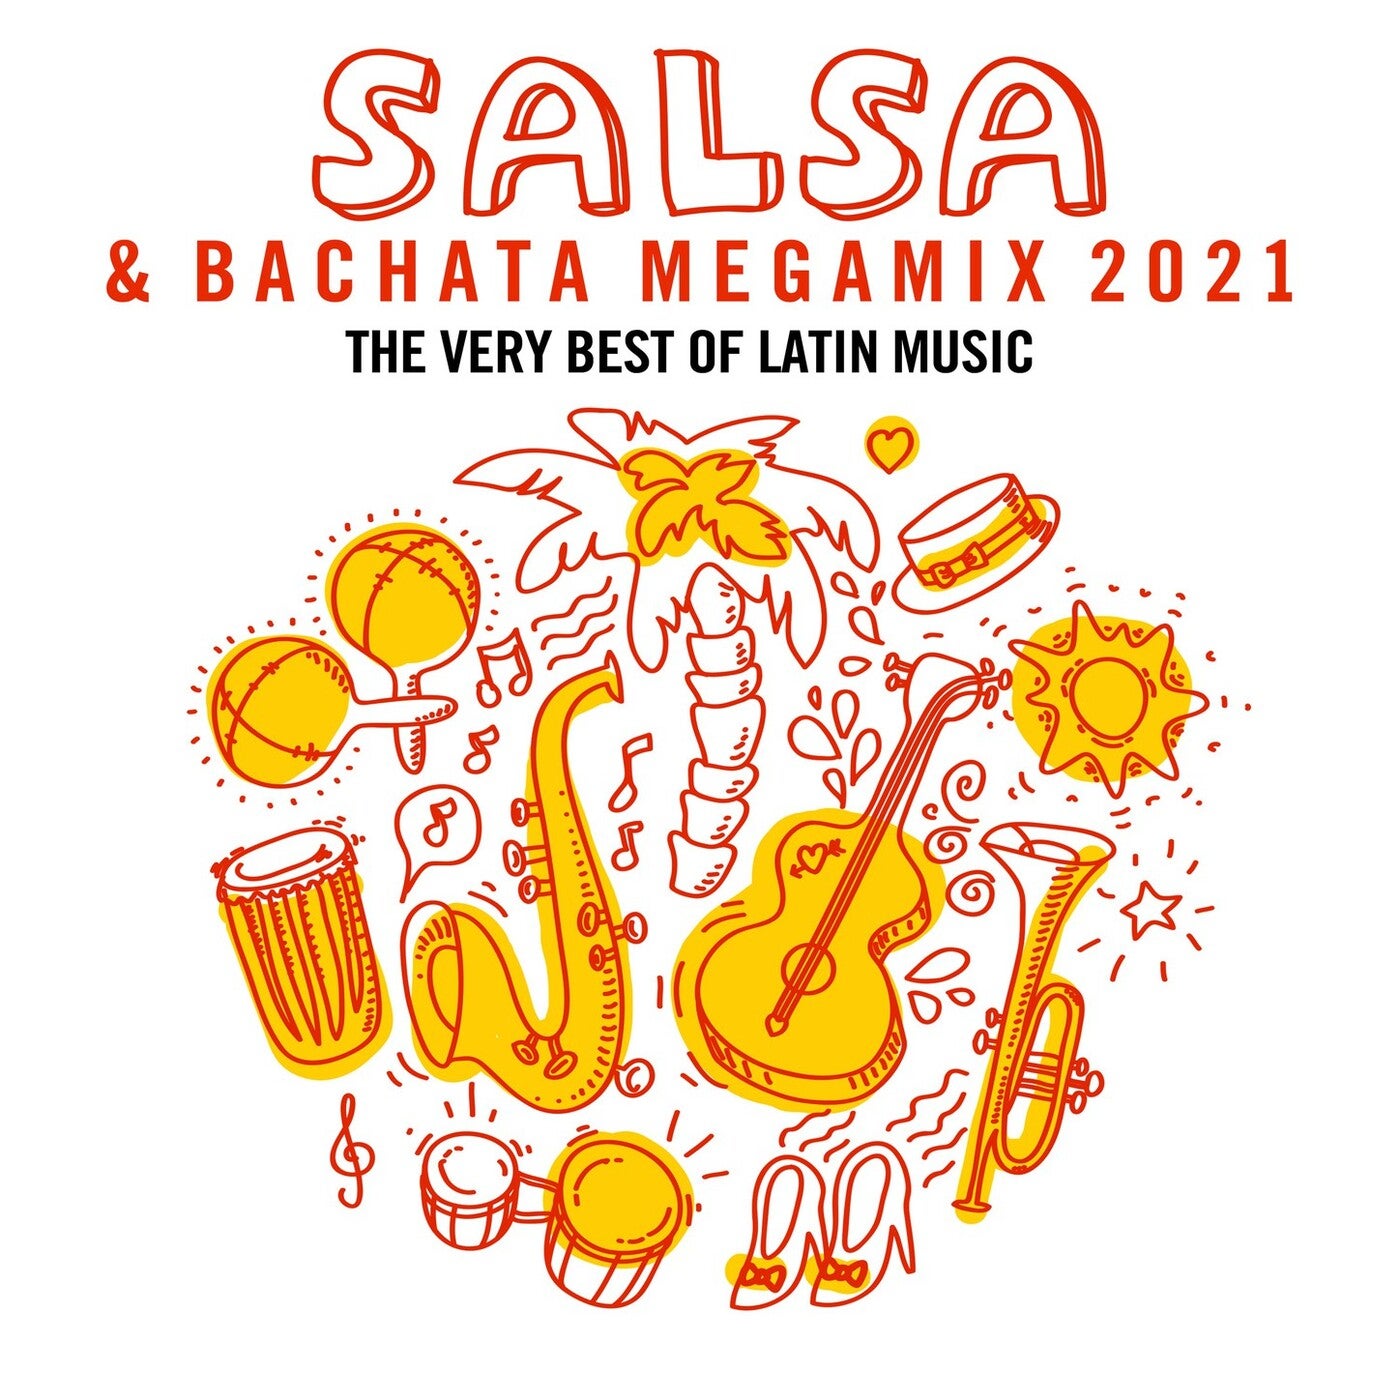 Salsa & Bachata Megamix 2021: The Very Best of Latin Music